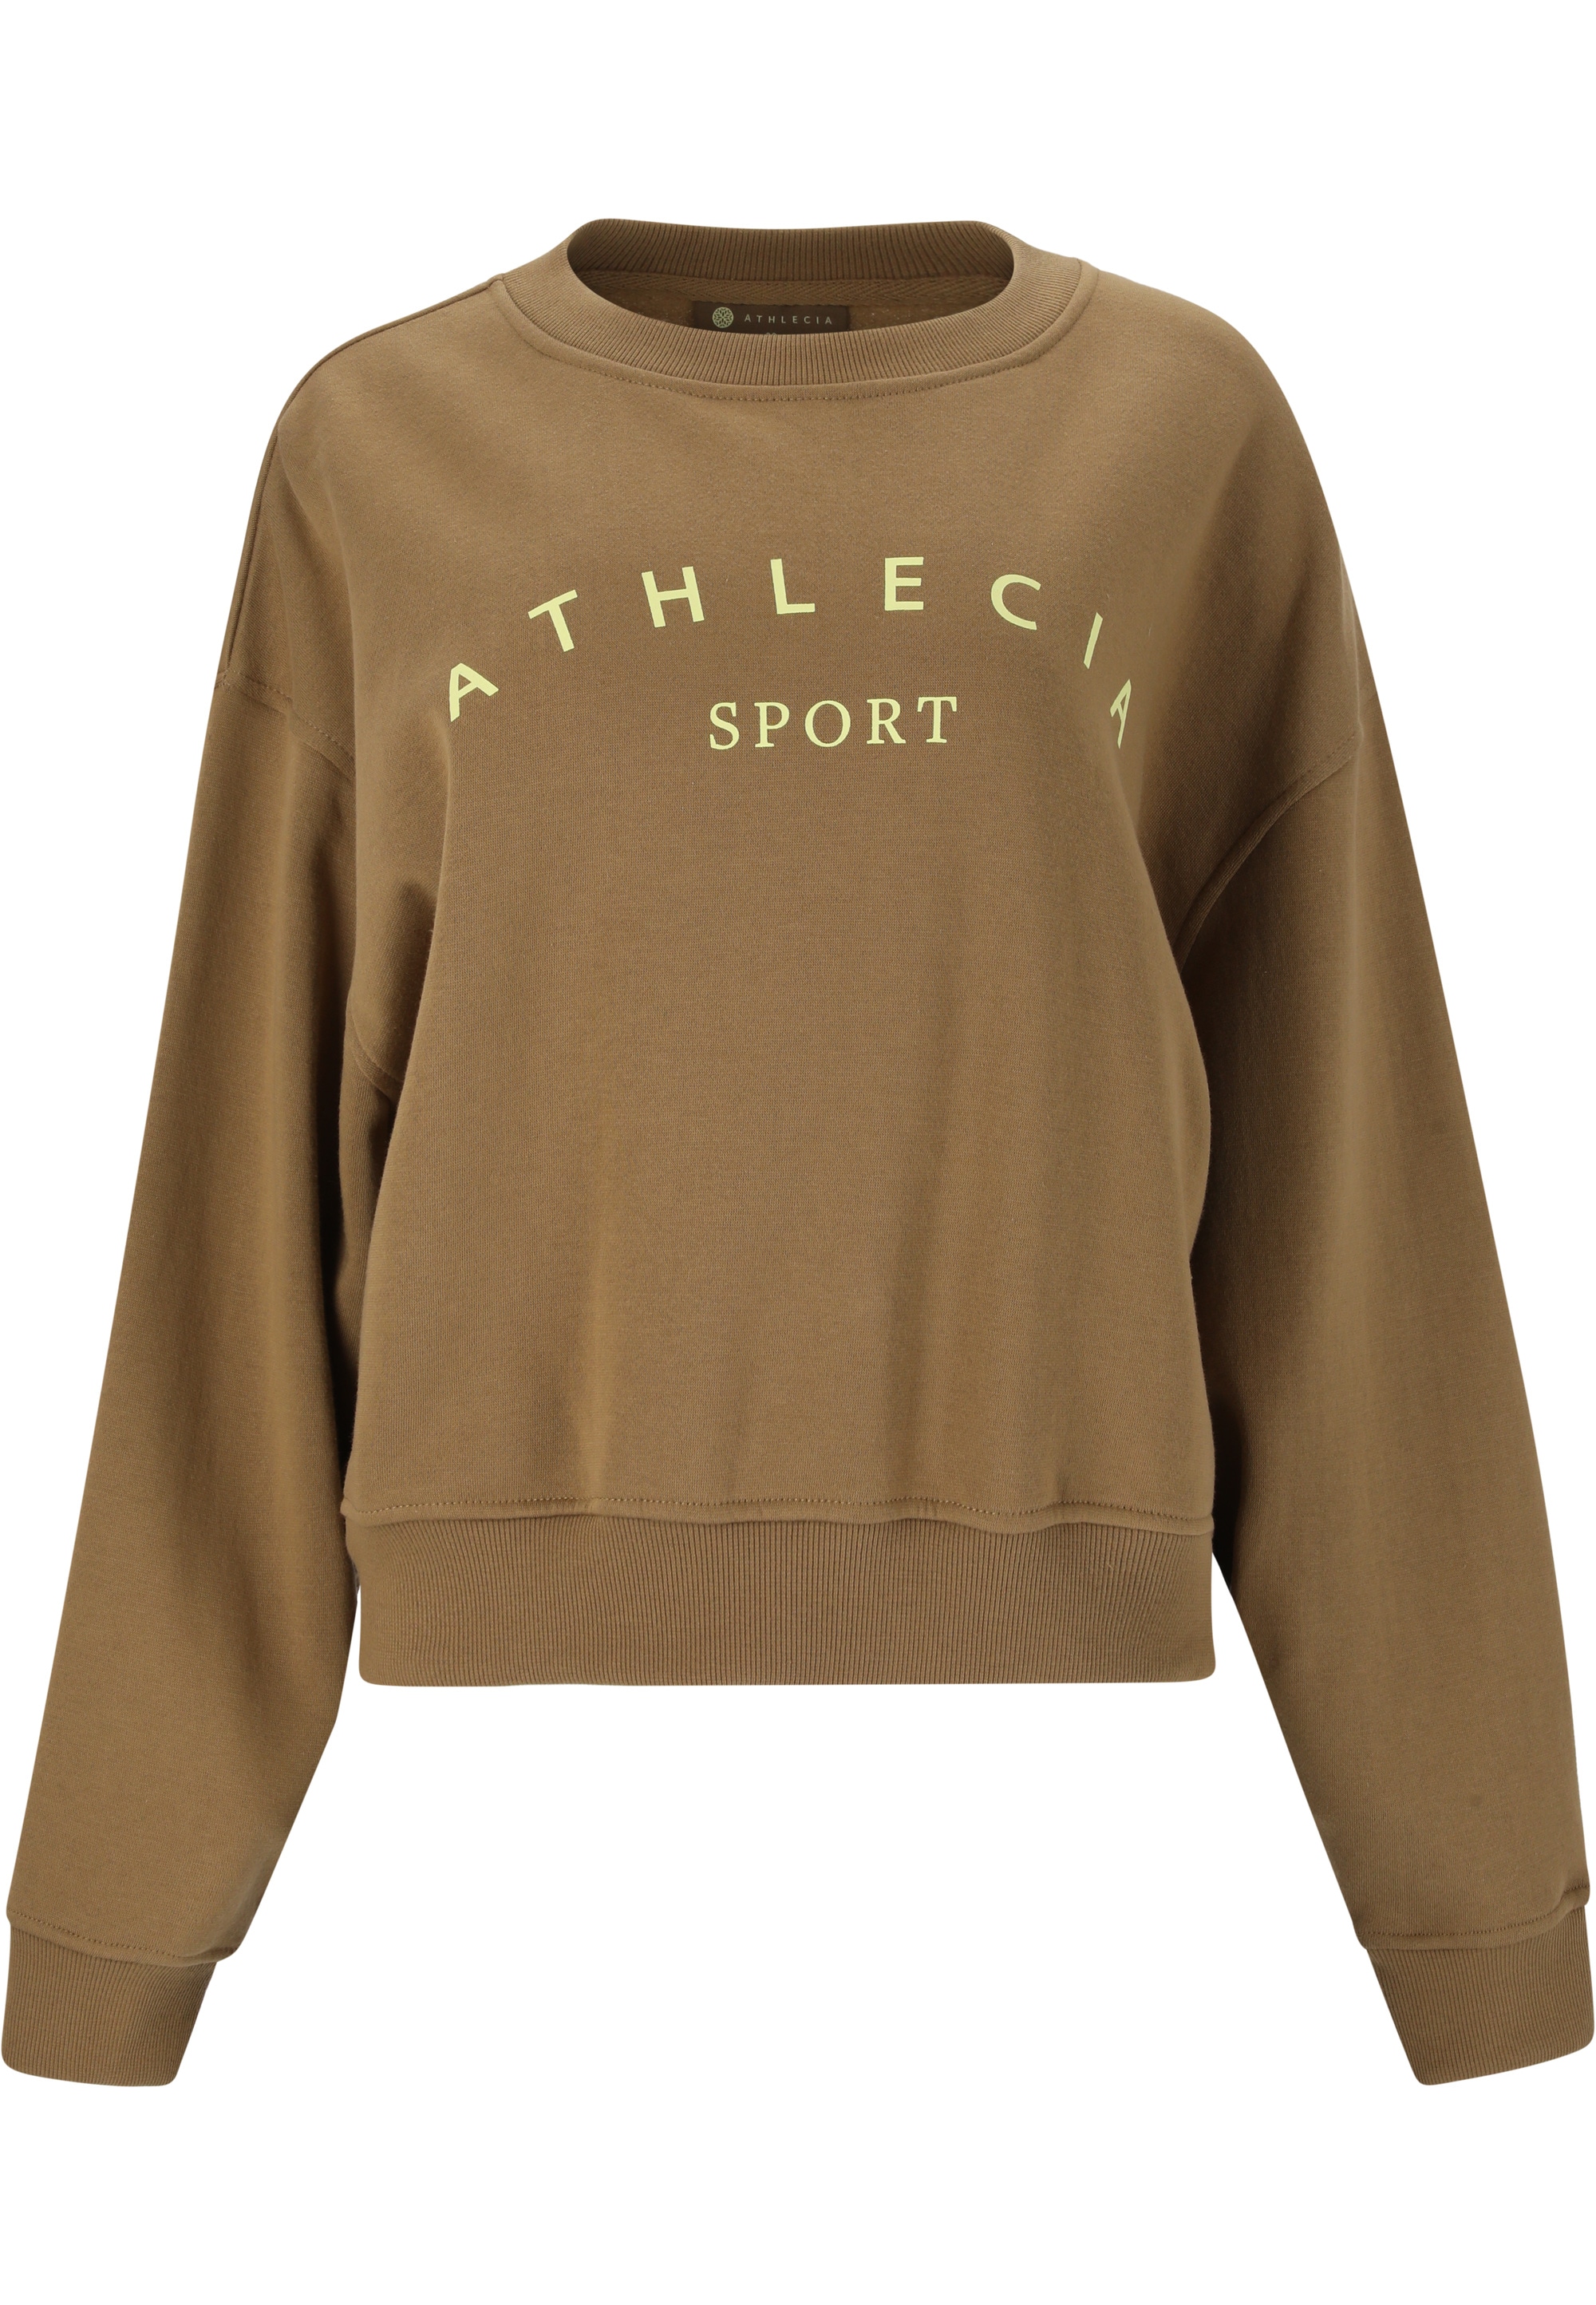 ATHLECIA Sweatshirt »Asport«, mit coolem Frontprint